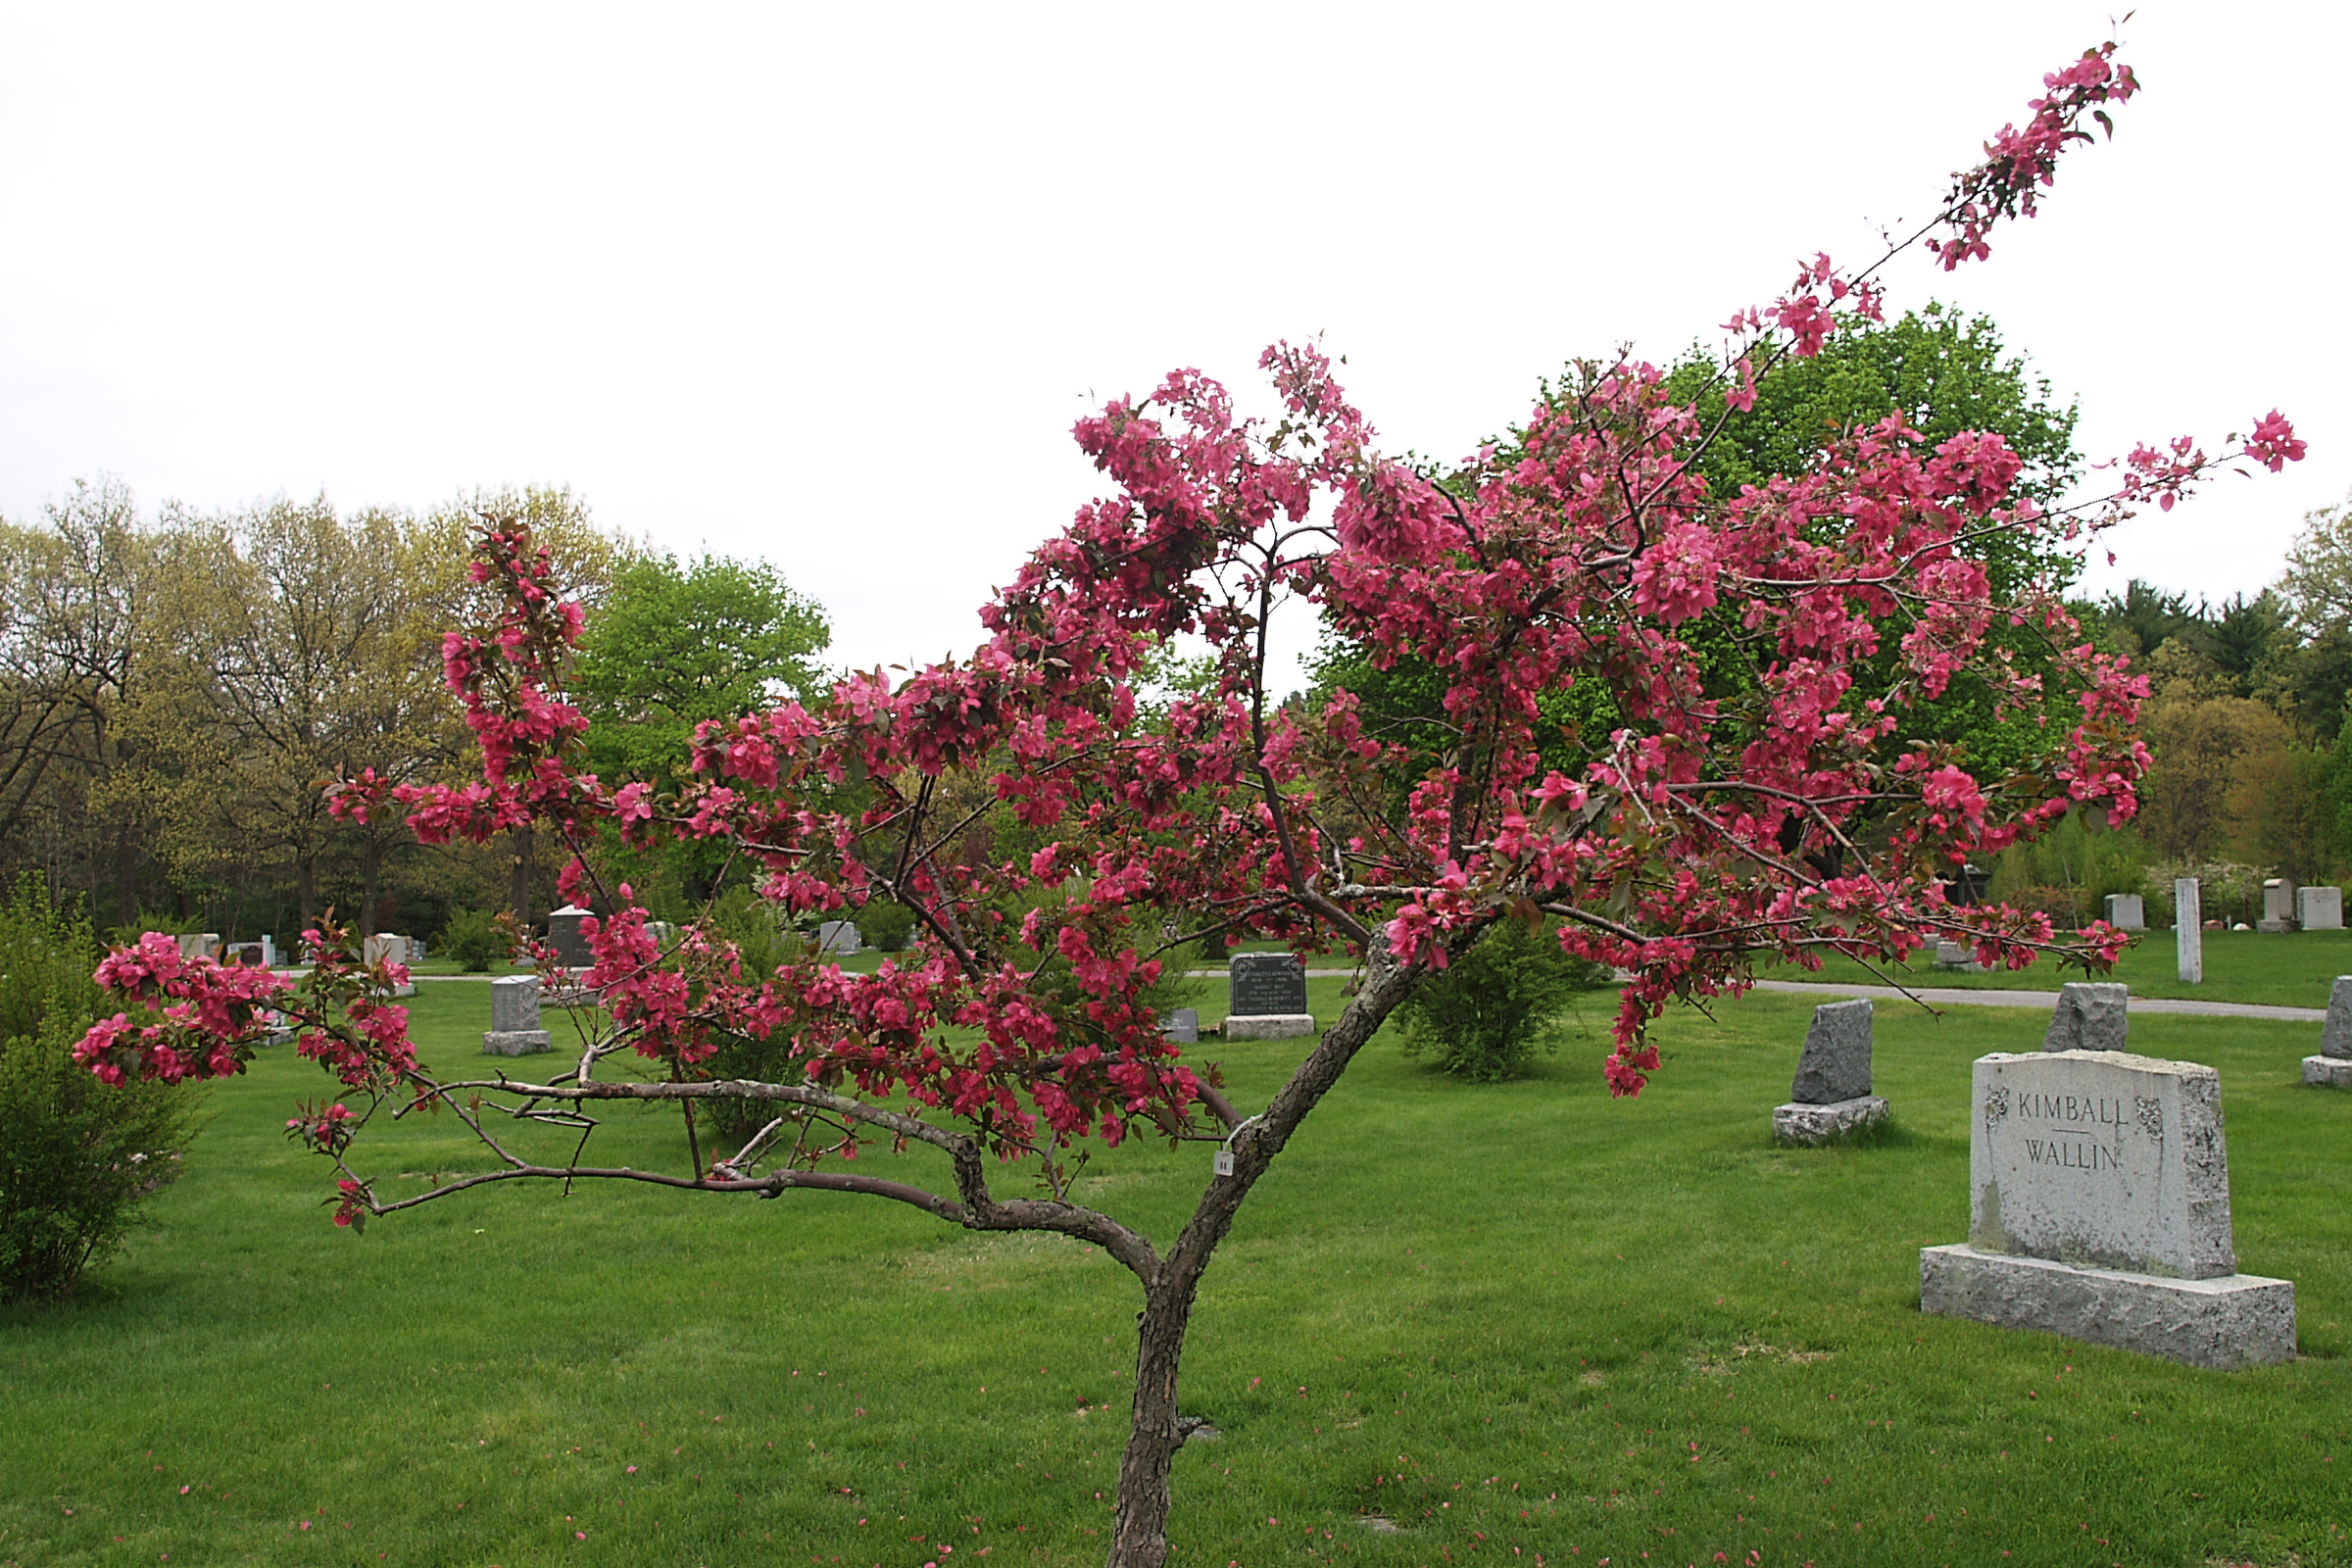 Spring in the graveyard #2